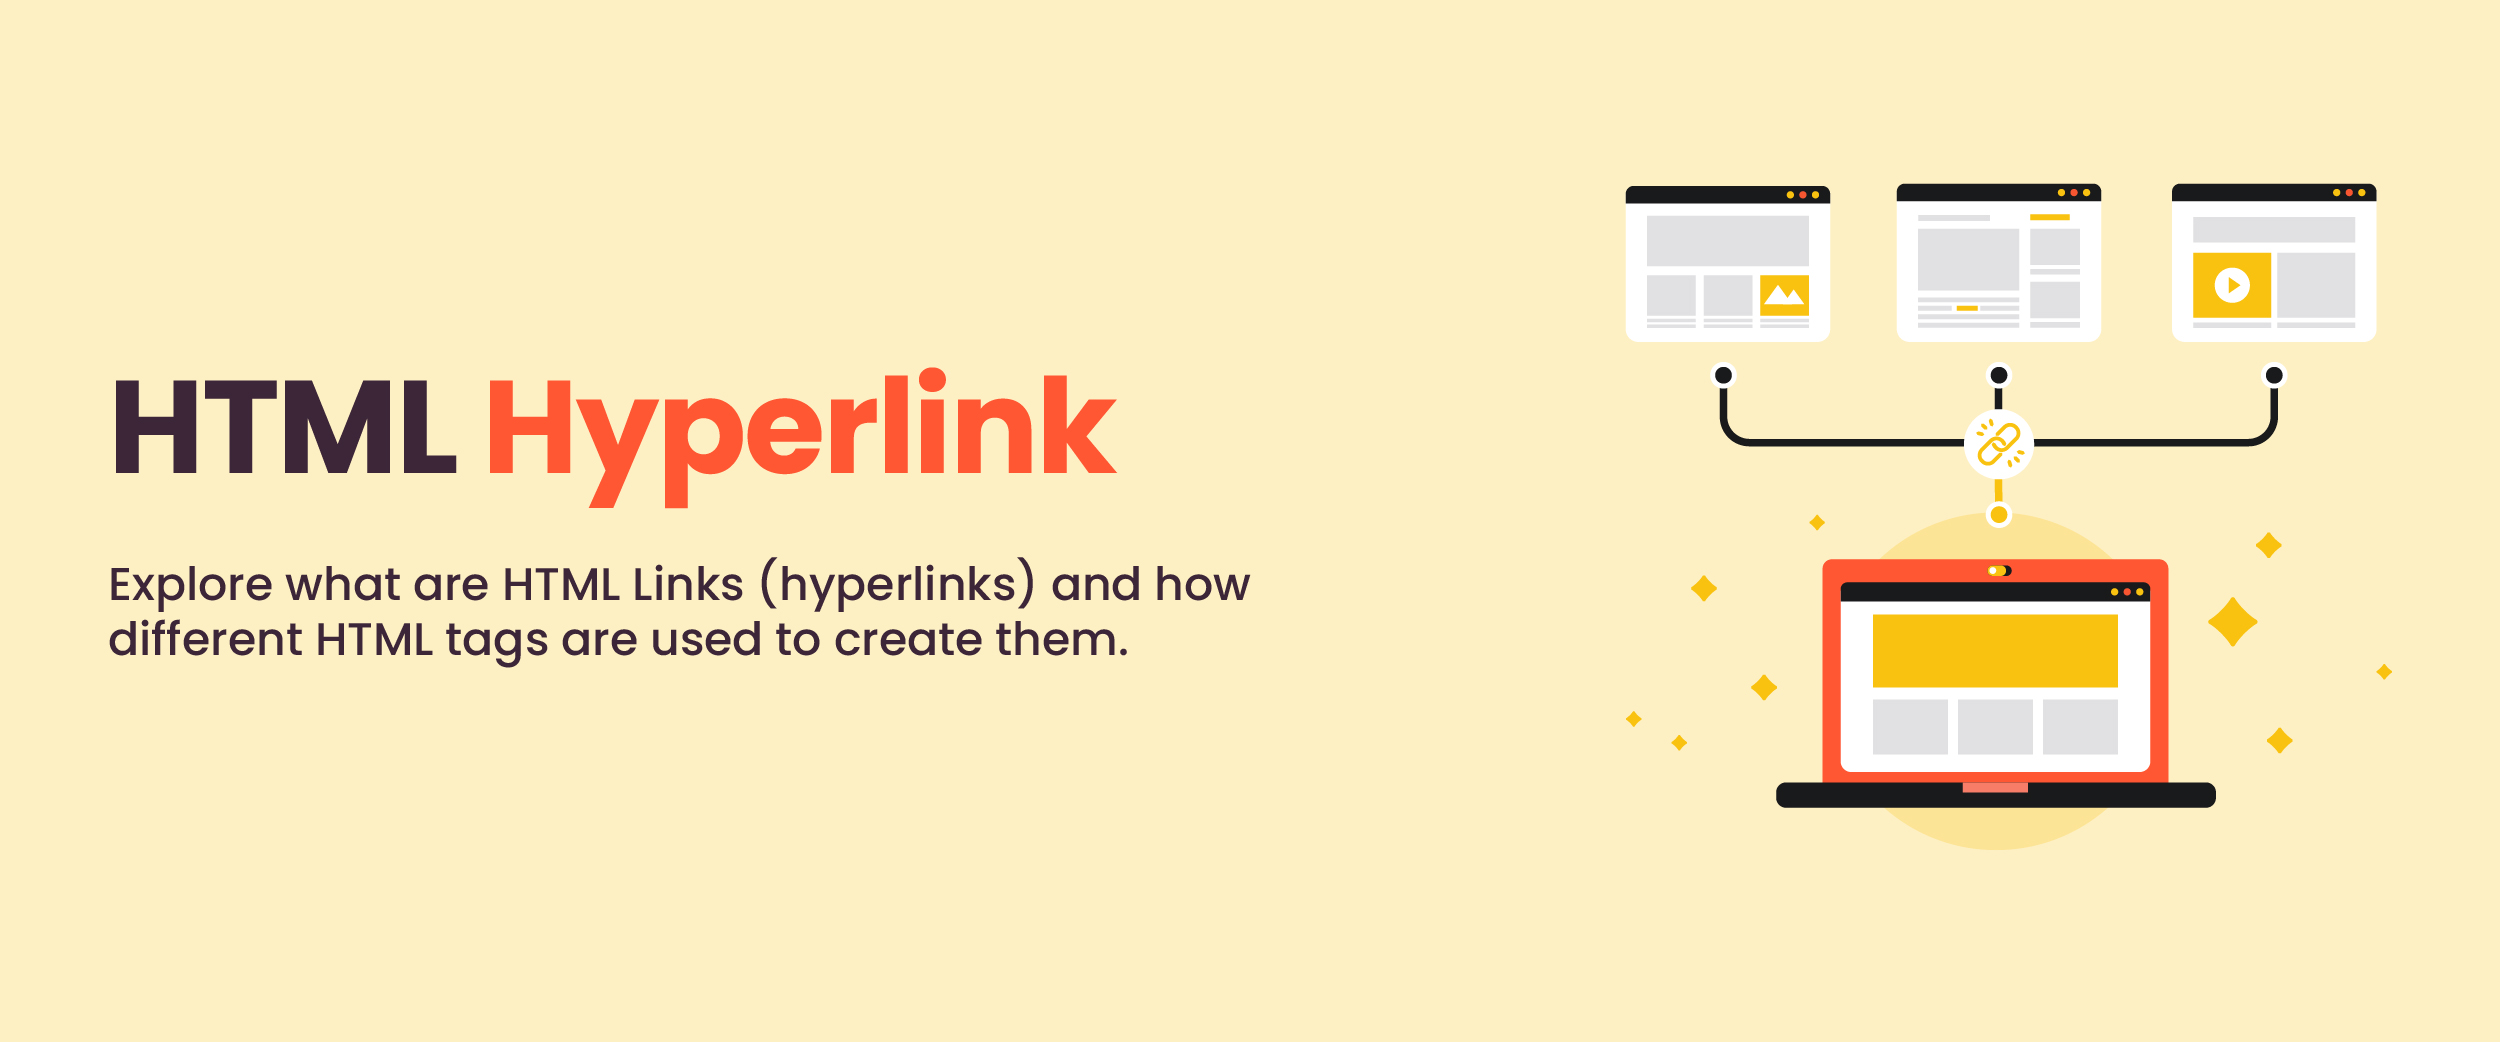 HTML Hyperlink